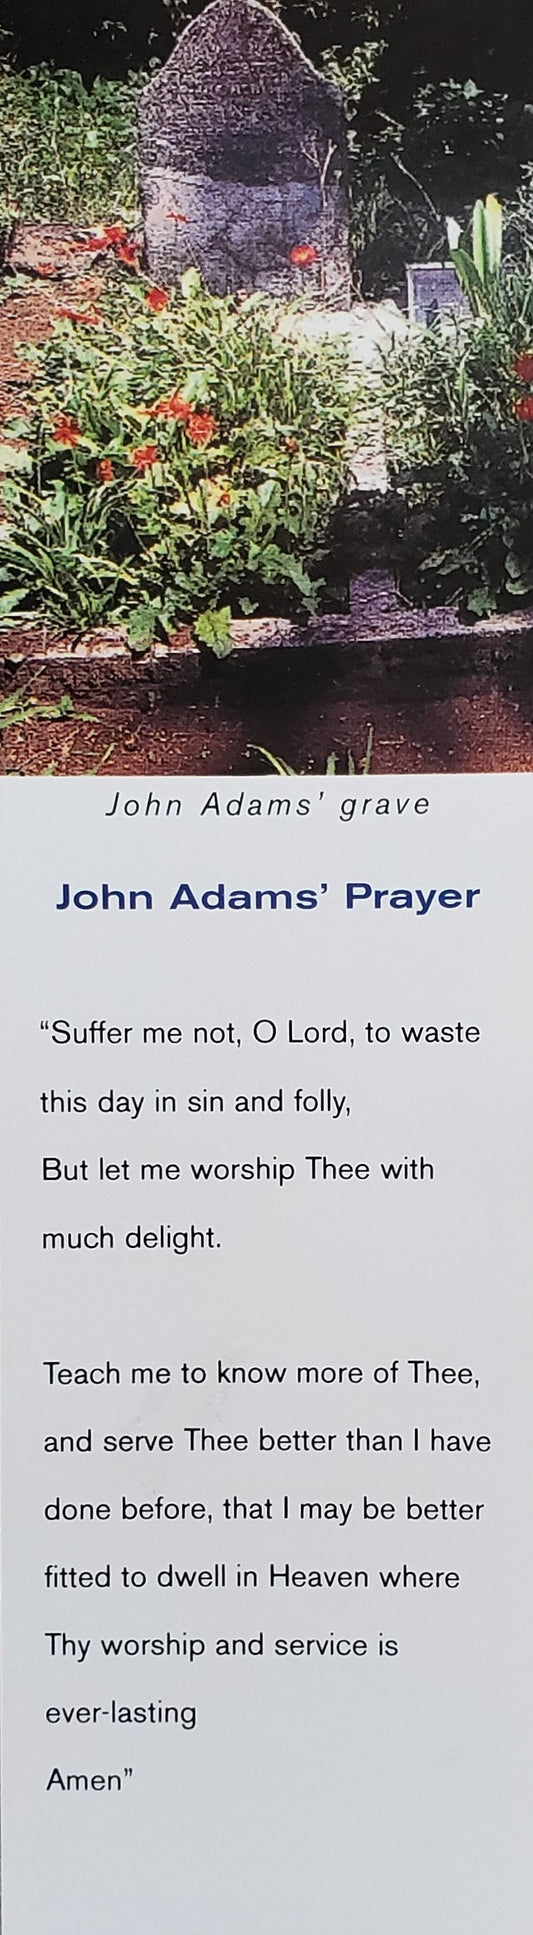 Bookmark - John Adams Grave, Card Stock